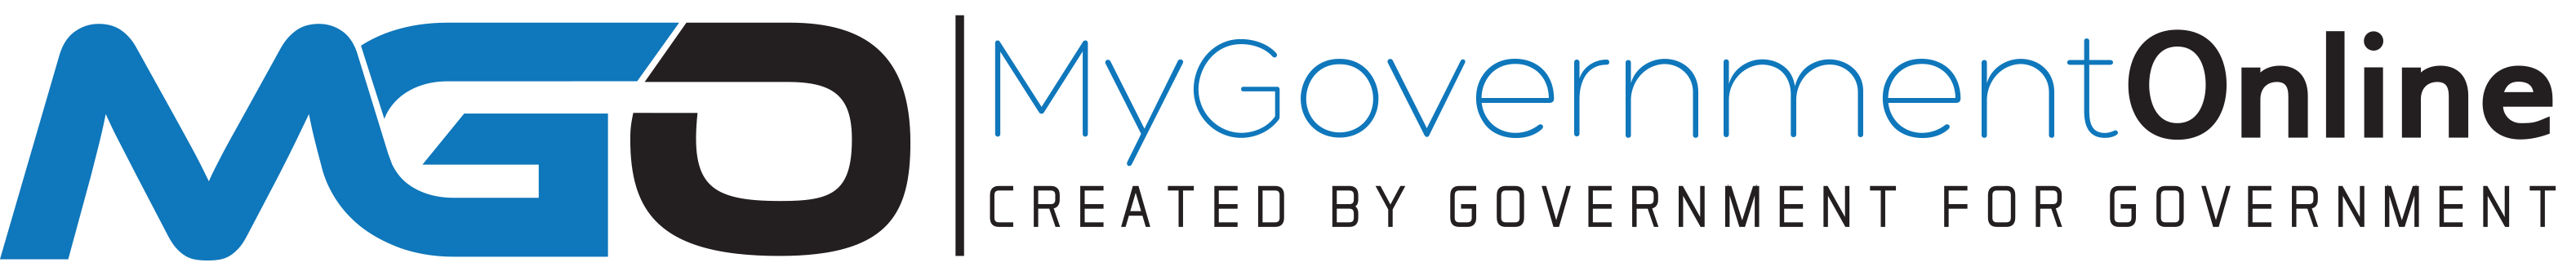 MyGovernmentOnline Logo